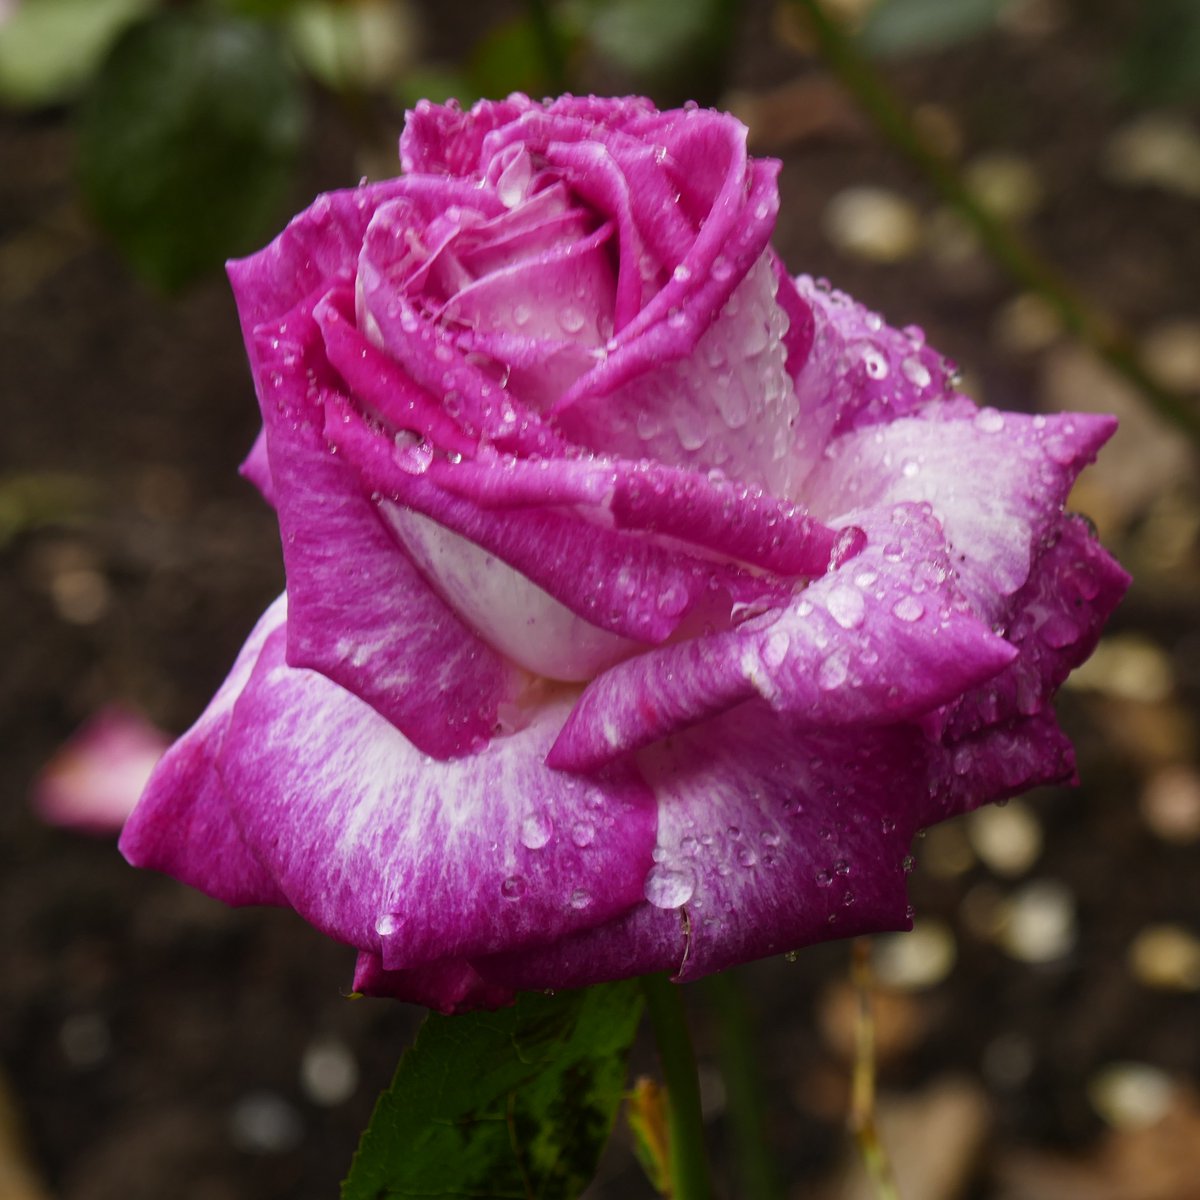 @DailyPicTheme2 Pink-purple rose with droplets in Panteg Park #DailyPictureTheme #aromatic #rose #flower #PantegPark #FishpondPark #Pontypool #Torfaen #Wales